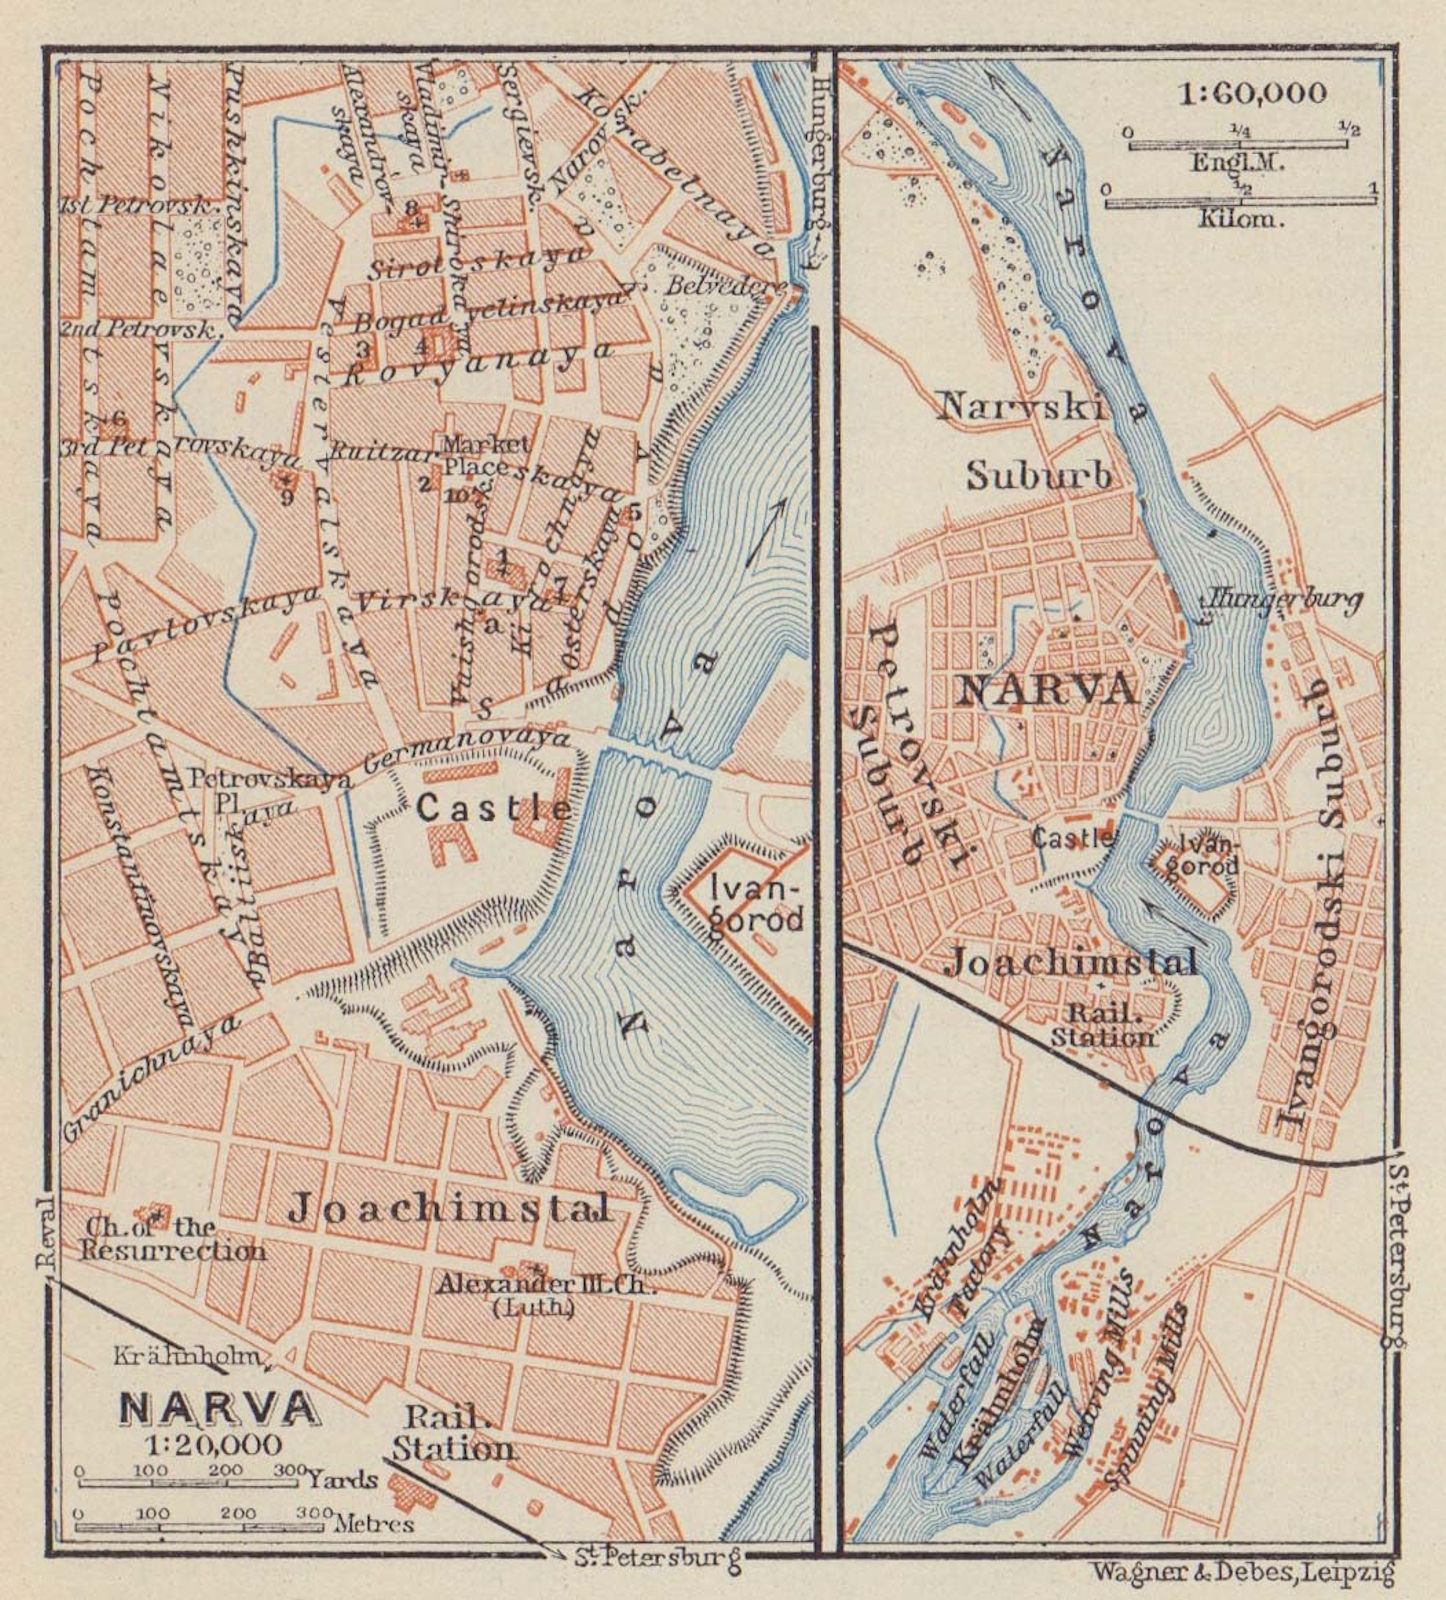 Associate Product Narva town/city plan linna kaart. Estonia. BAEDEKER 1914 old antique map chart